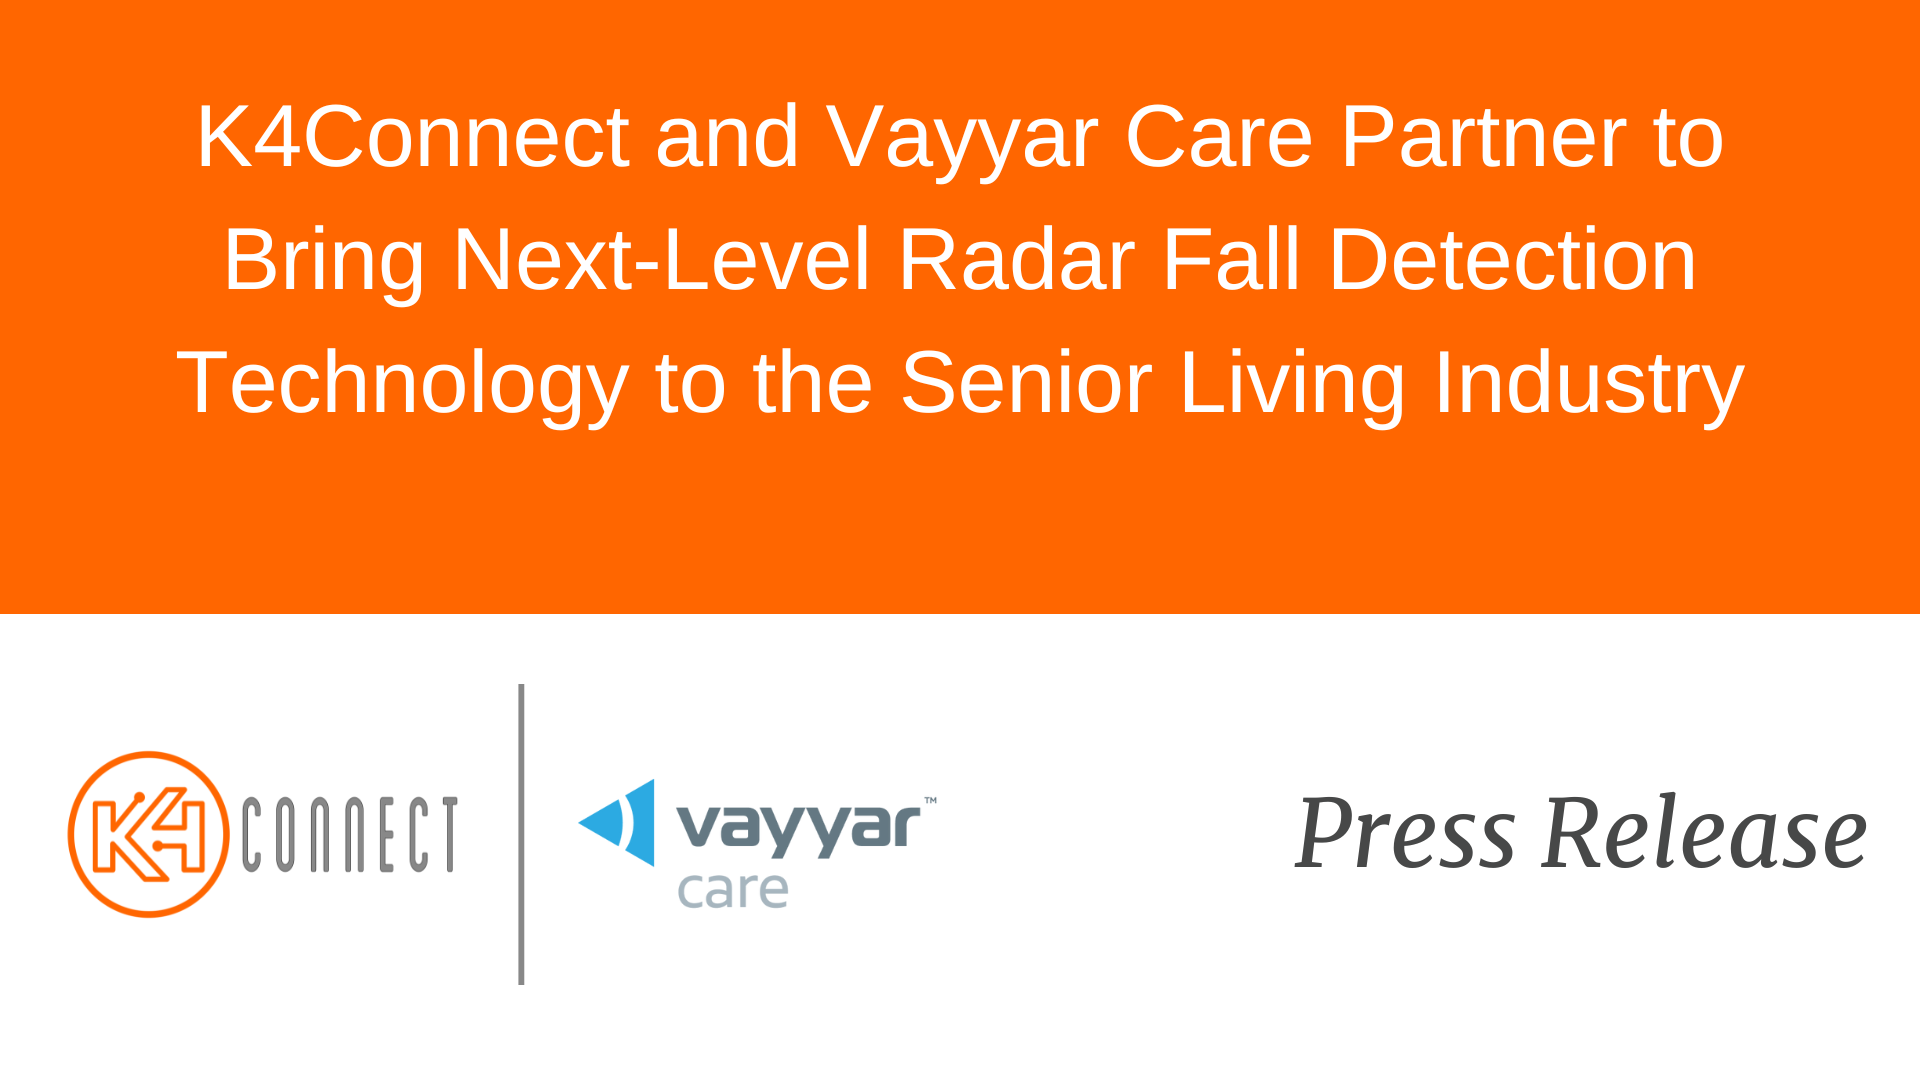 Vayyar launches home radar sensor for remotely detecting falls